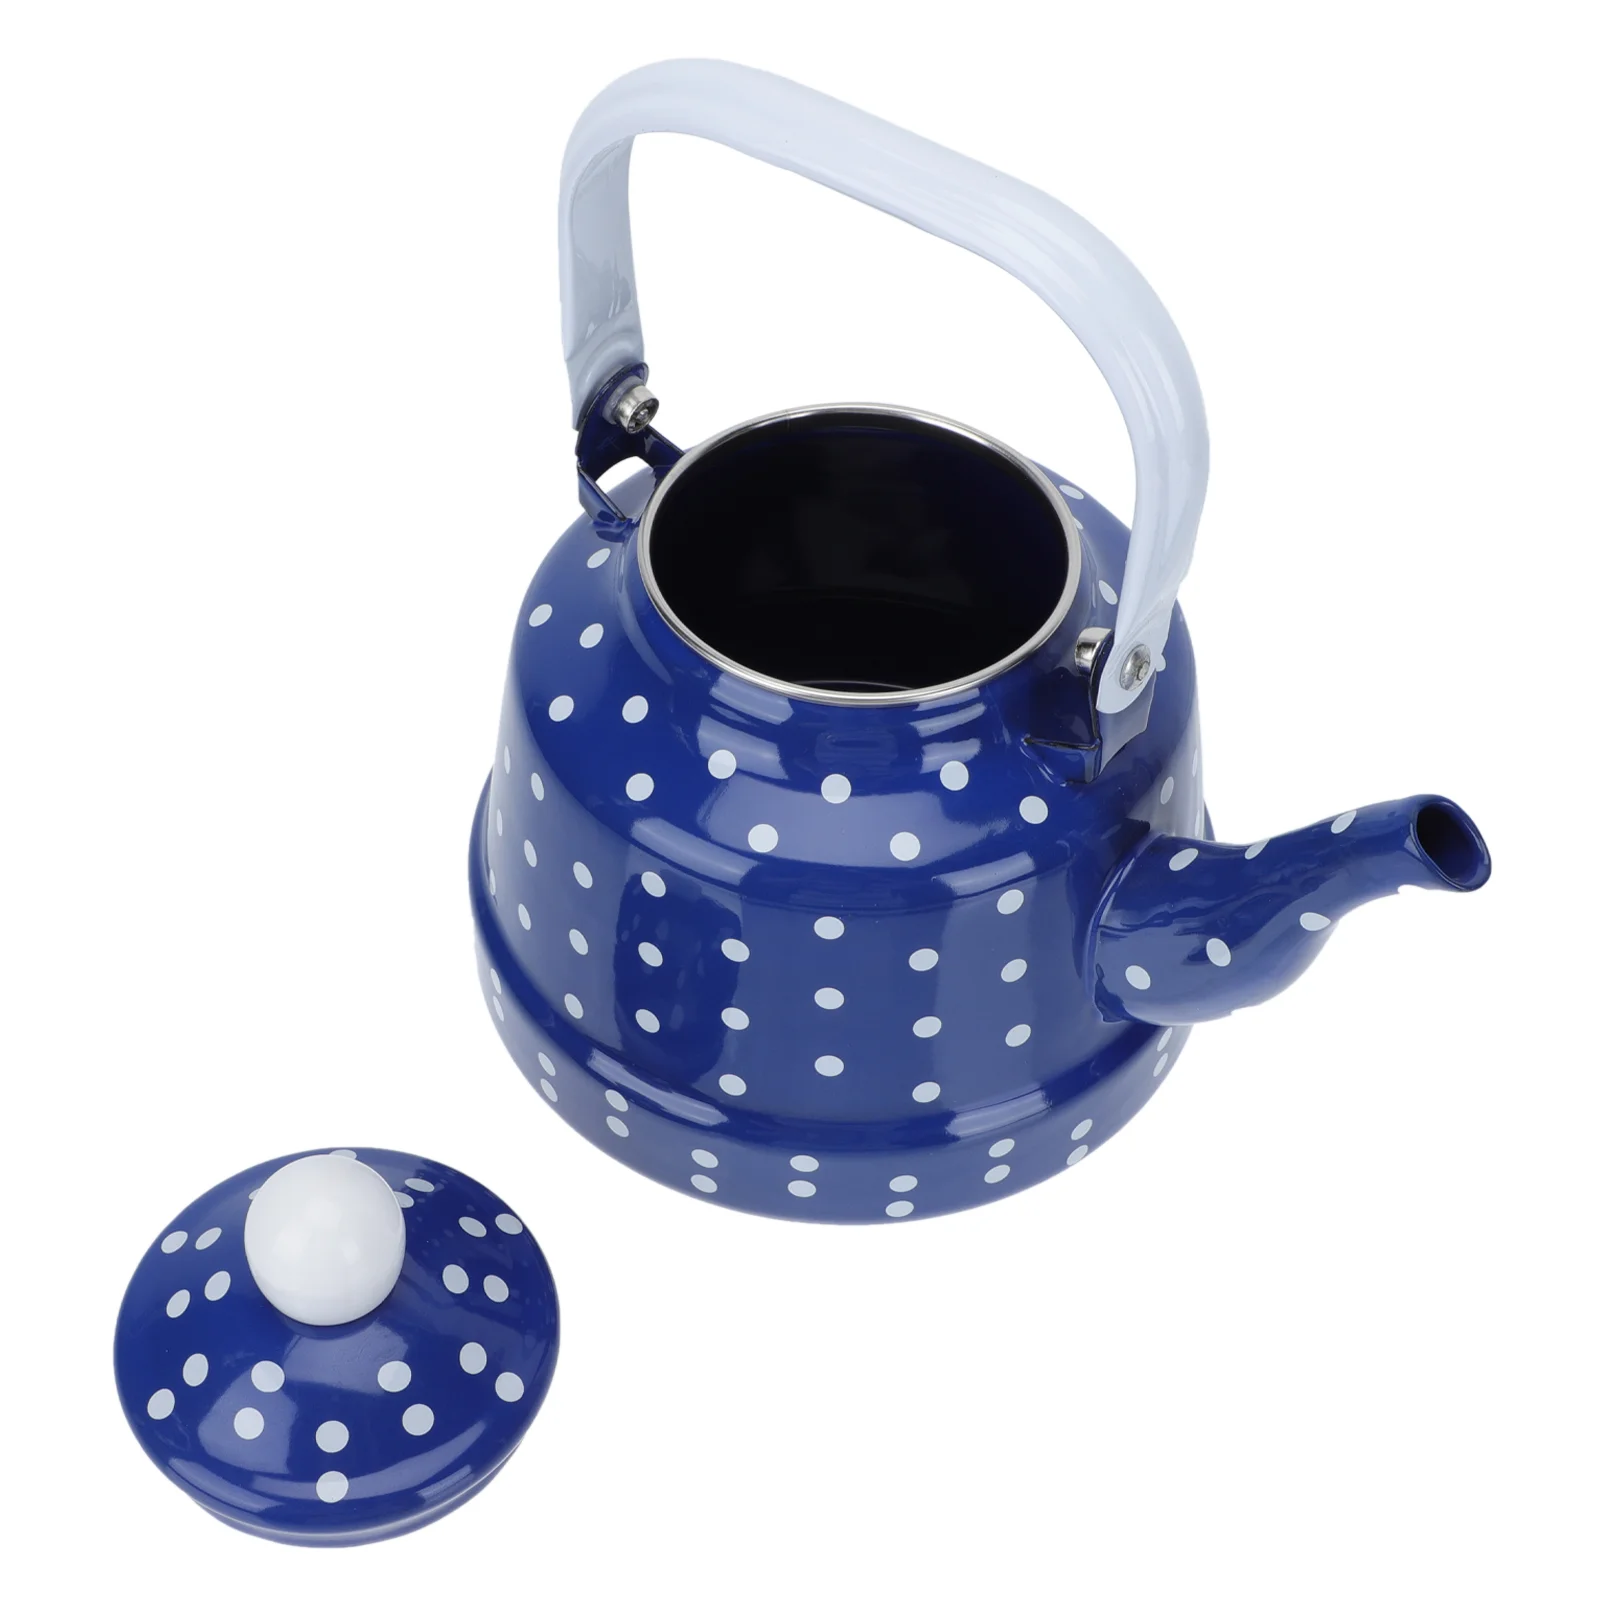 

Kettle Tea Teapot Pot Water Enamel Coffee Ceramic Boiling Kettles Top Vintage Whistling Enameled Stovetop Japanese Loose Polka